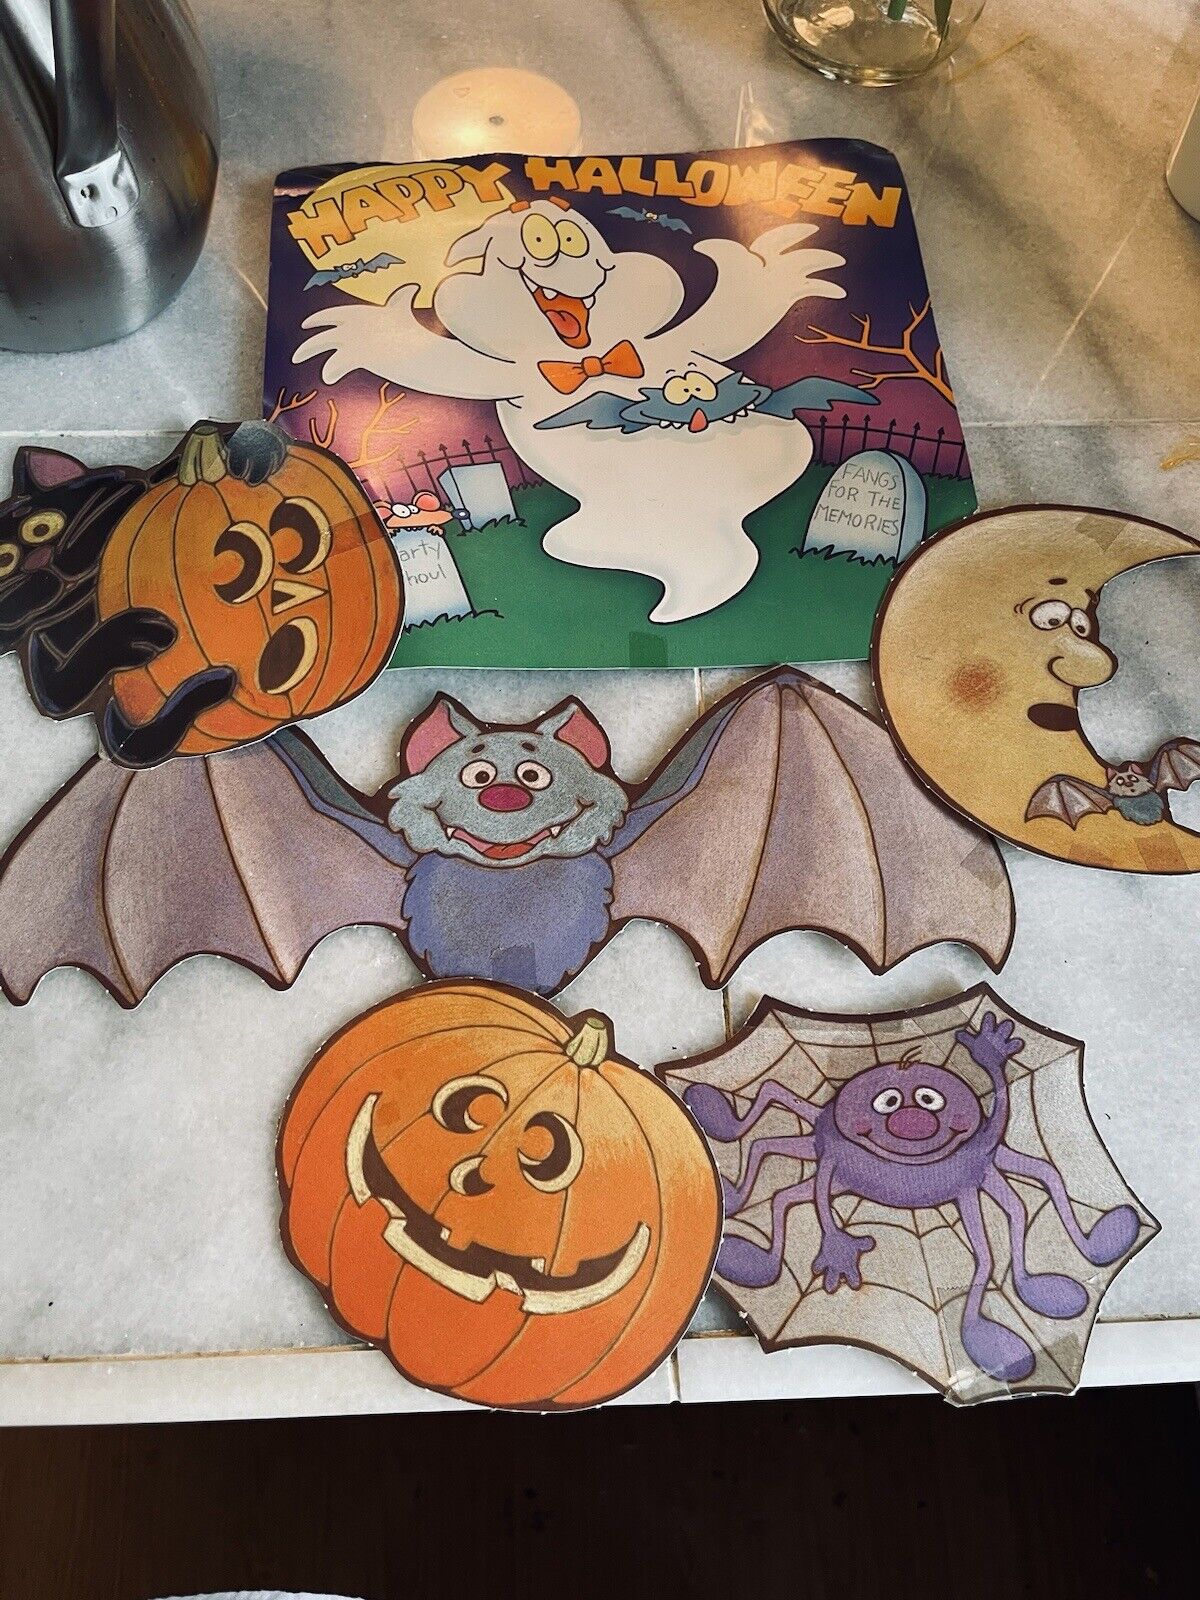 Lot of 6 VTG Halloween Die Cut Paper Cardboard Decorations Ghost Bat Spider